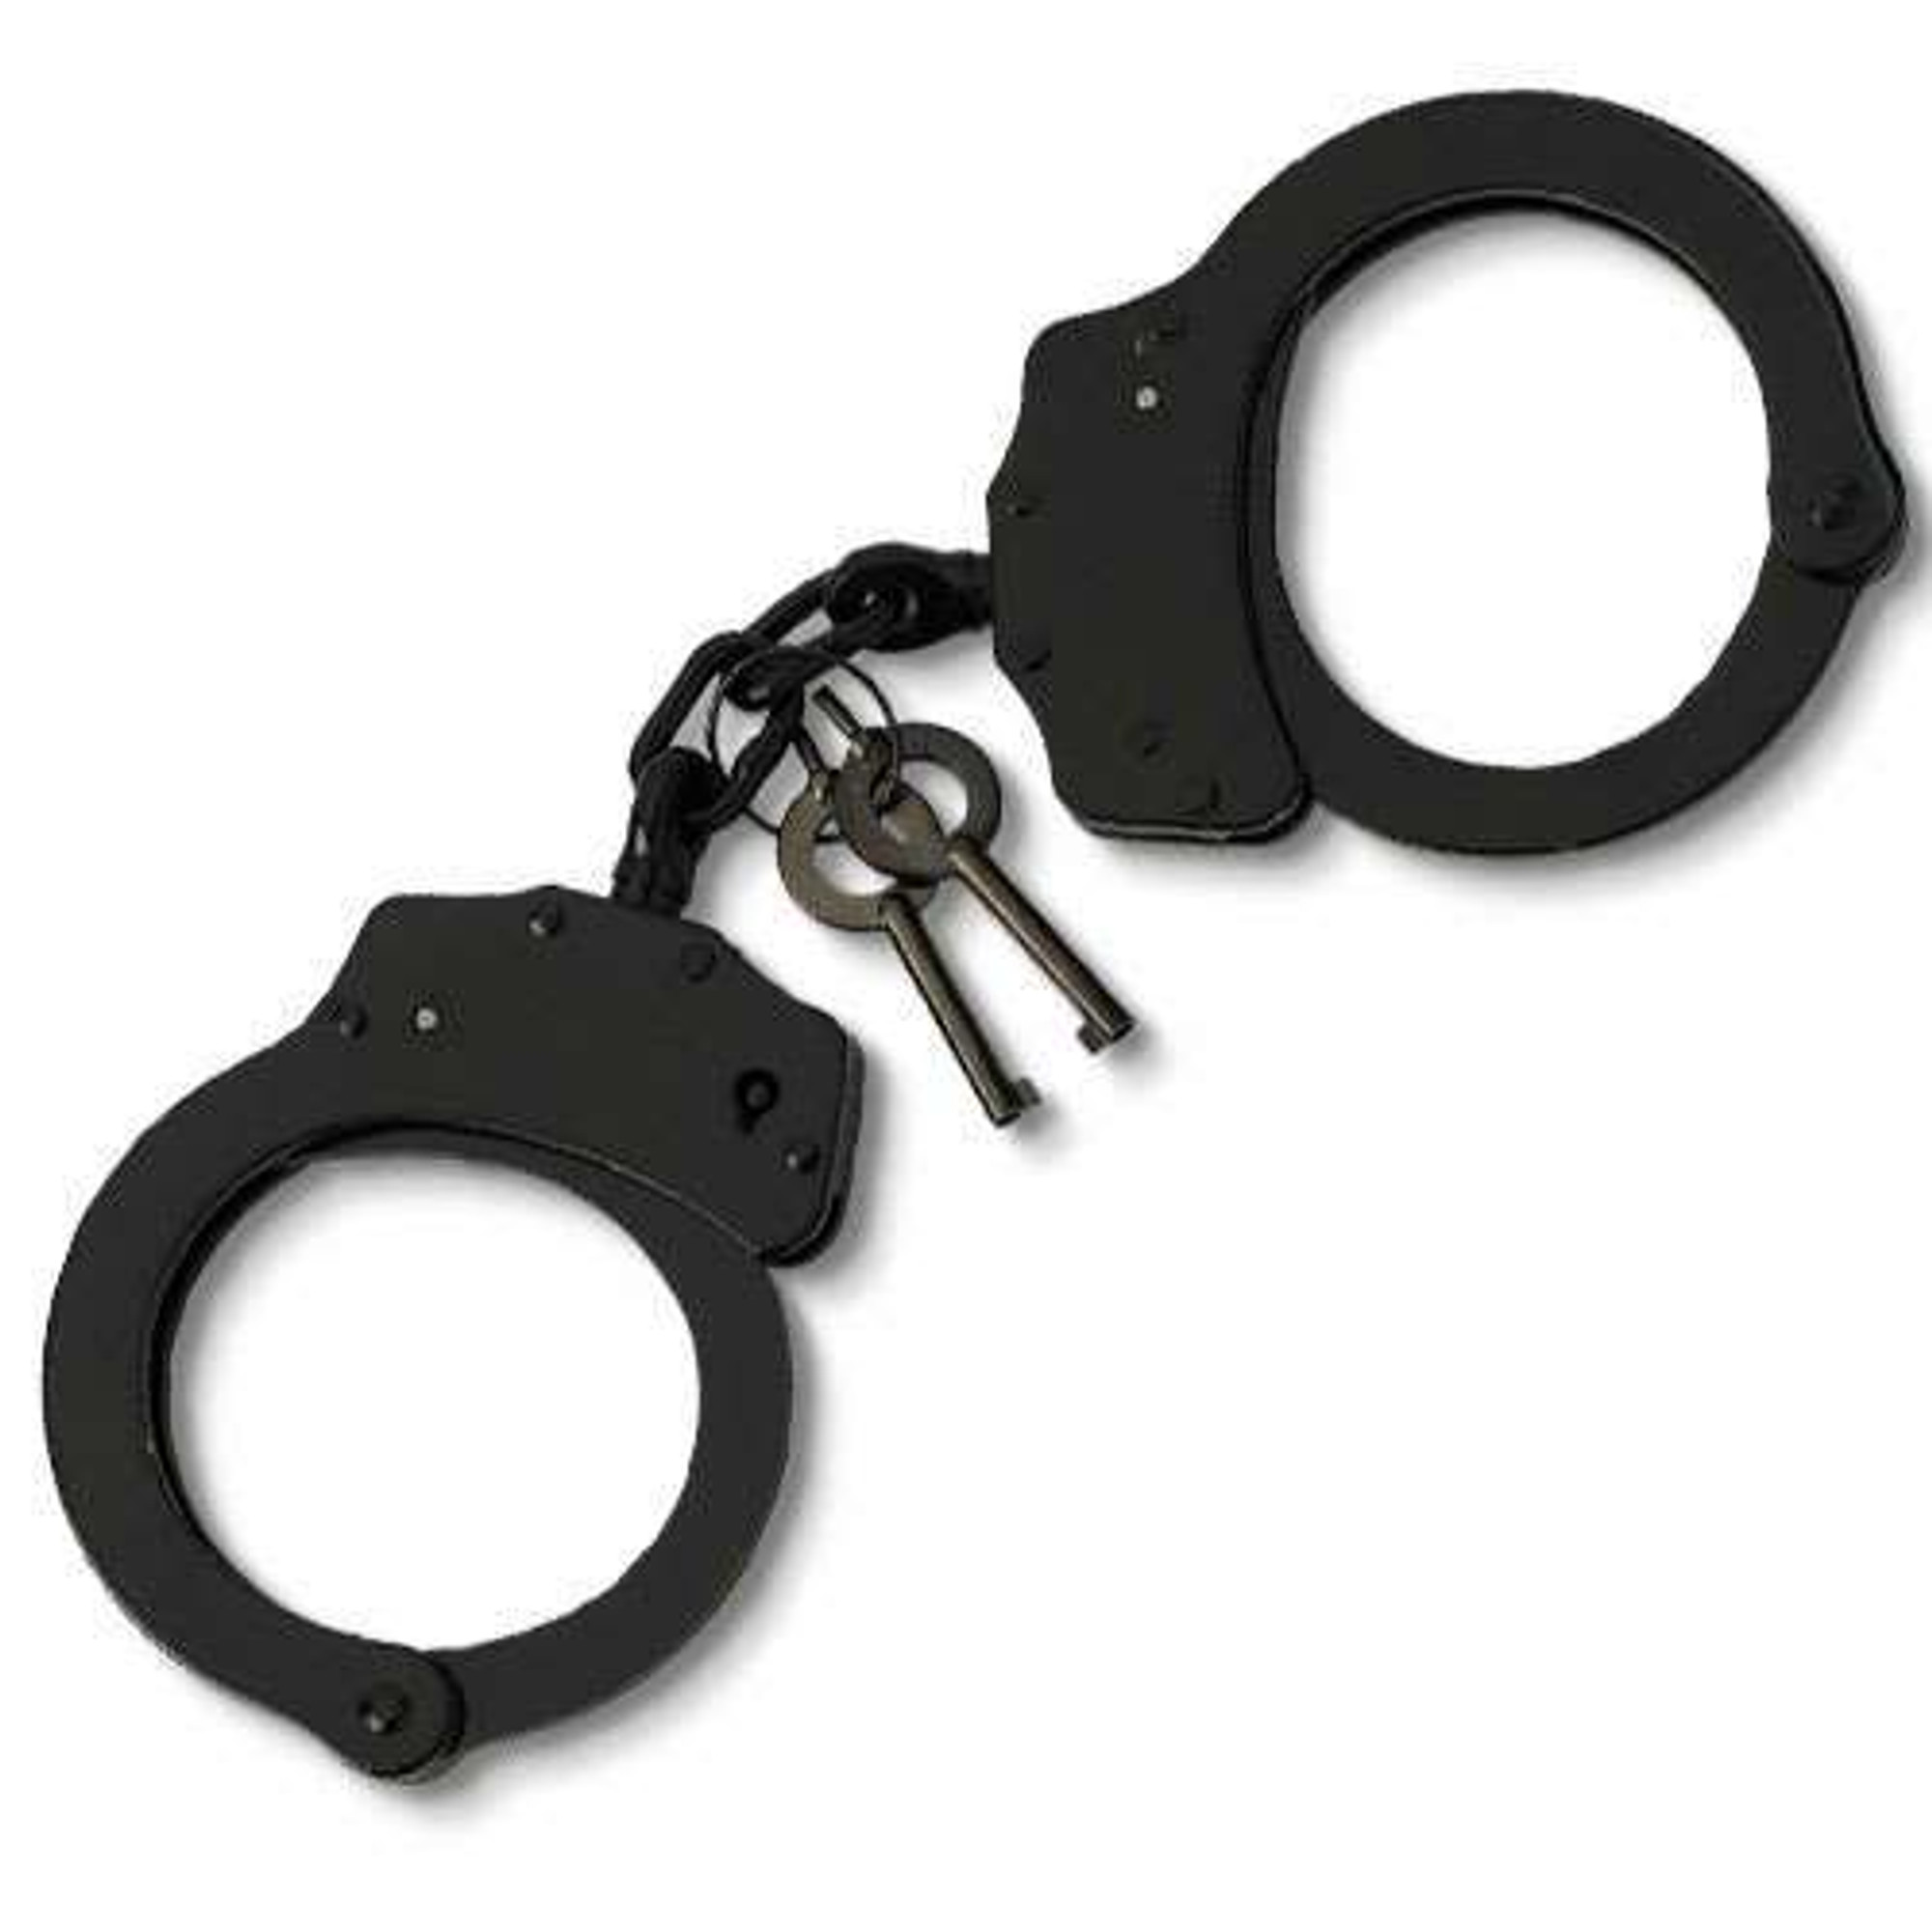 Rothco Professional Detective Handcuffs - Black